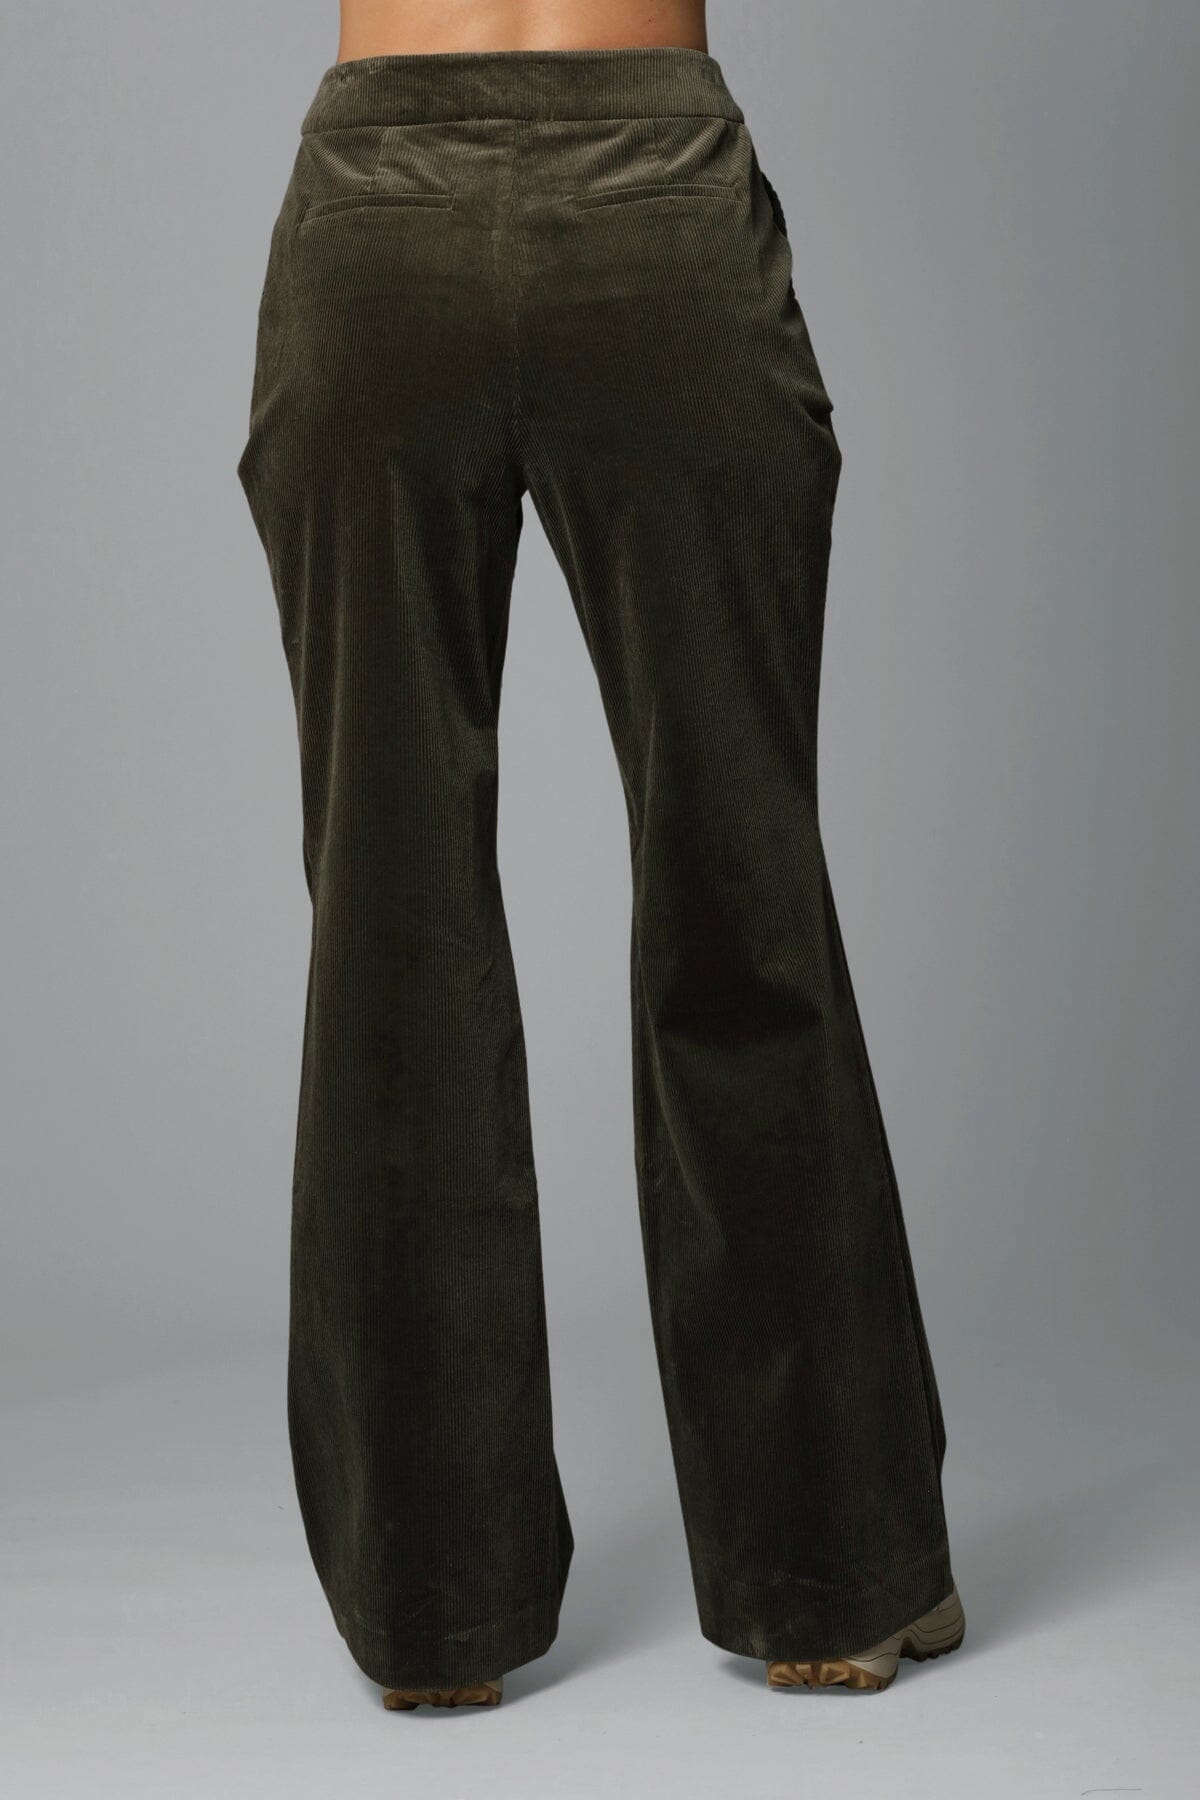 Womens Harem Ali Baba Full Pants Trousers Ladies Baggy Hareem Leggings Plus  Size | eBay